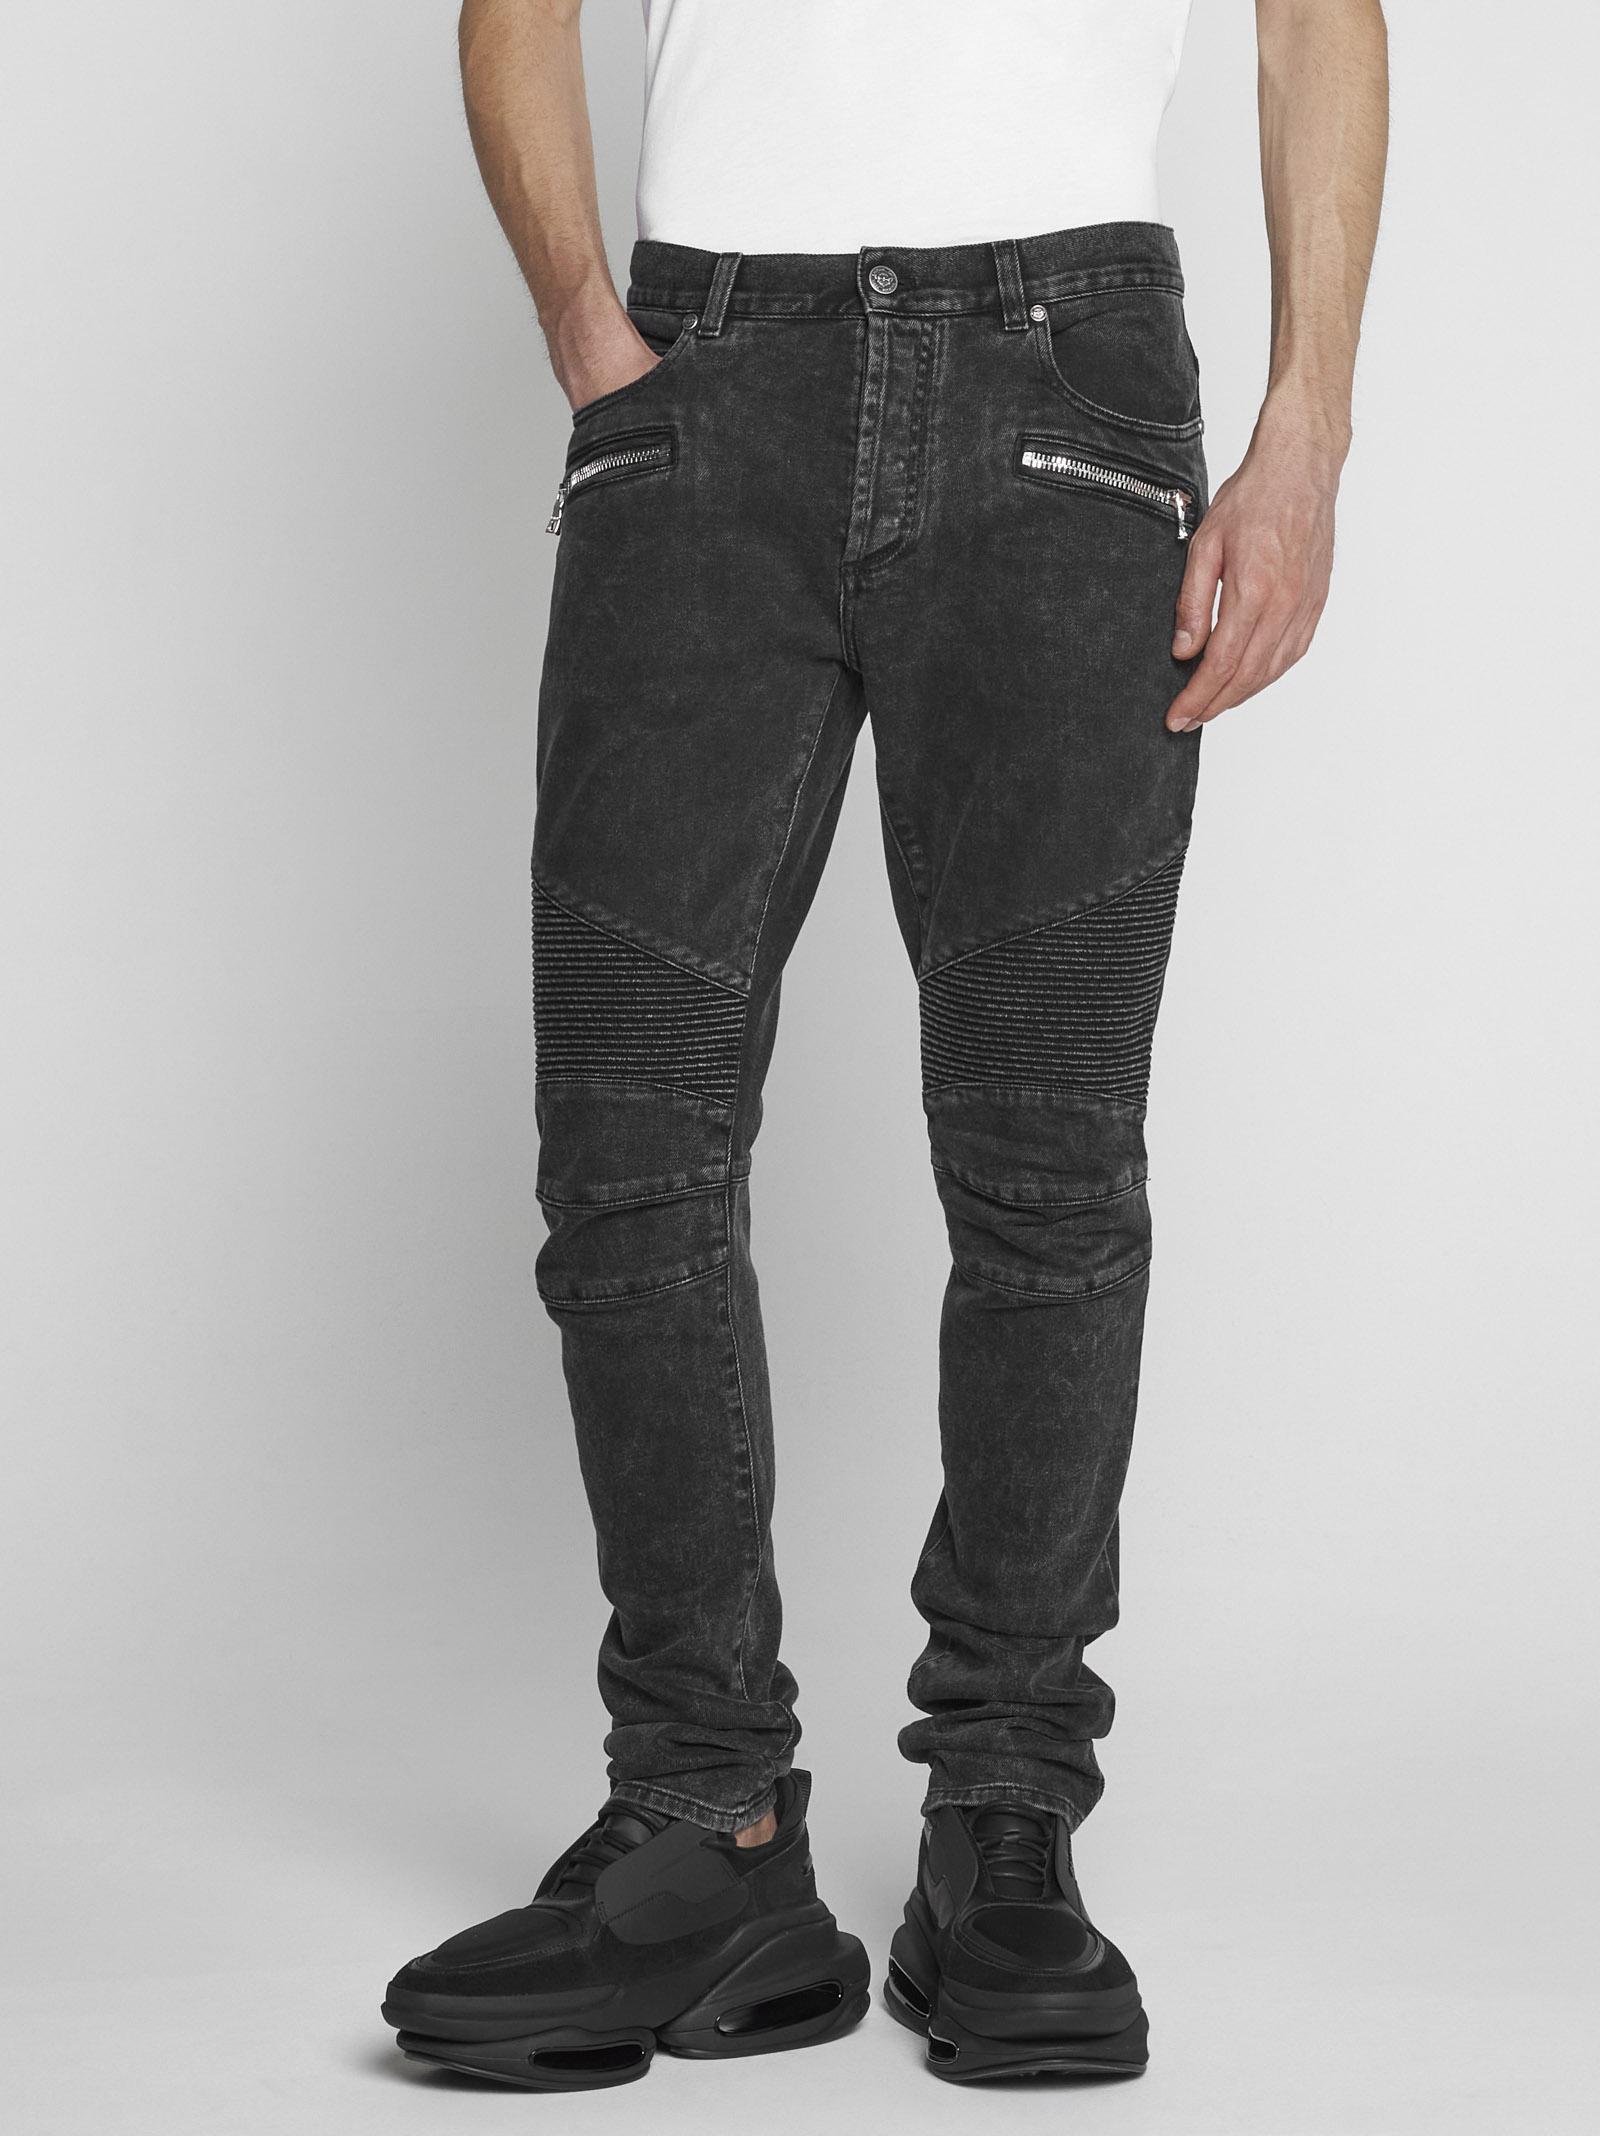 Balmain Style Jeans for Men | Lyst